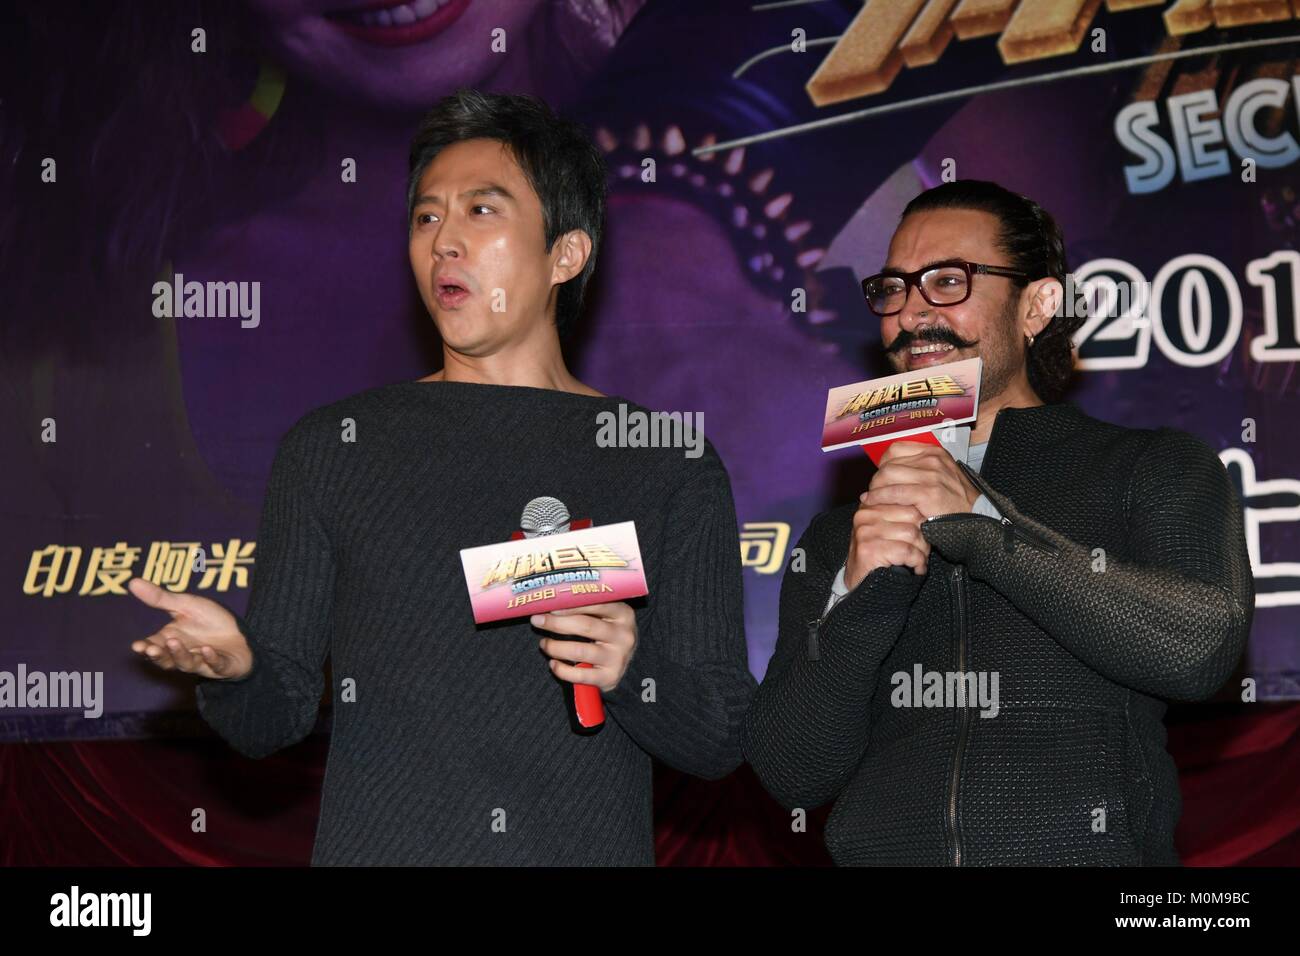 Shanghai, China. 22 Jan, 2018. Aamir Khan fördert für geheime Superstar in Shanghai, China, am 22. Januar 2018. (Foto durch TPG) Credit: TopPhoto/Alamy leben Nachrichten Stockfoto